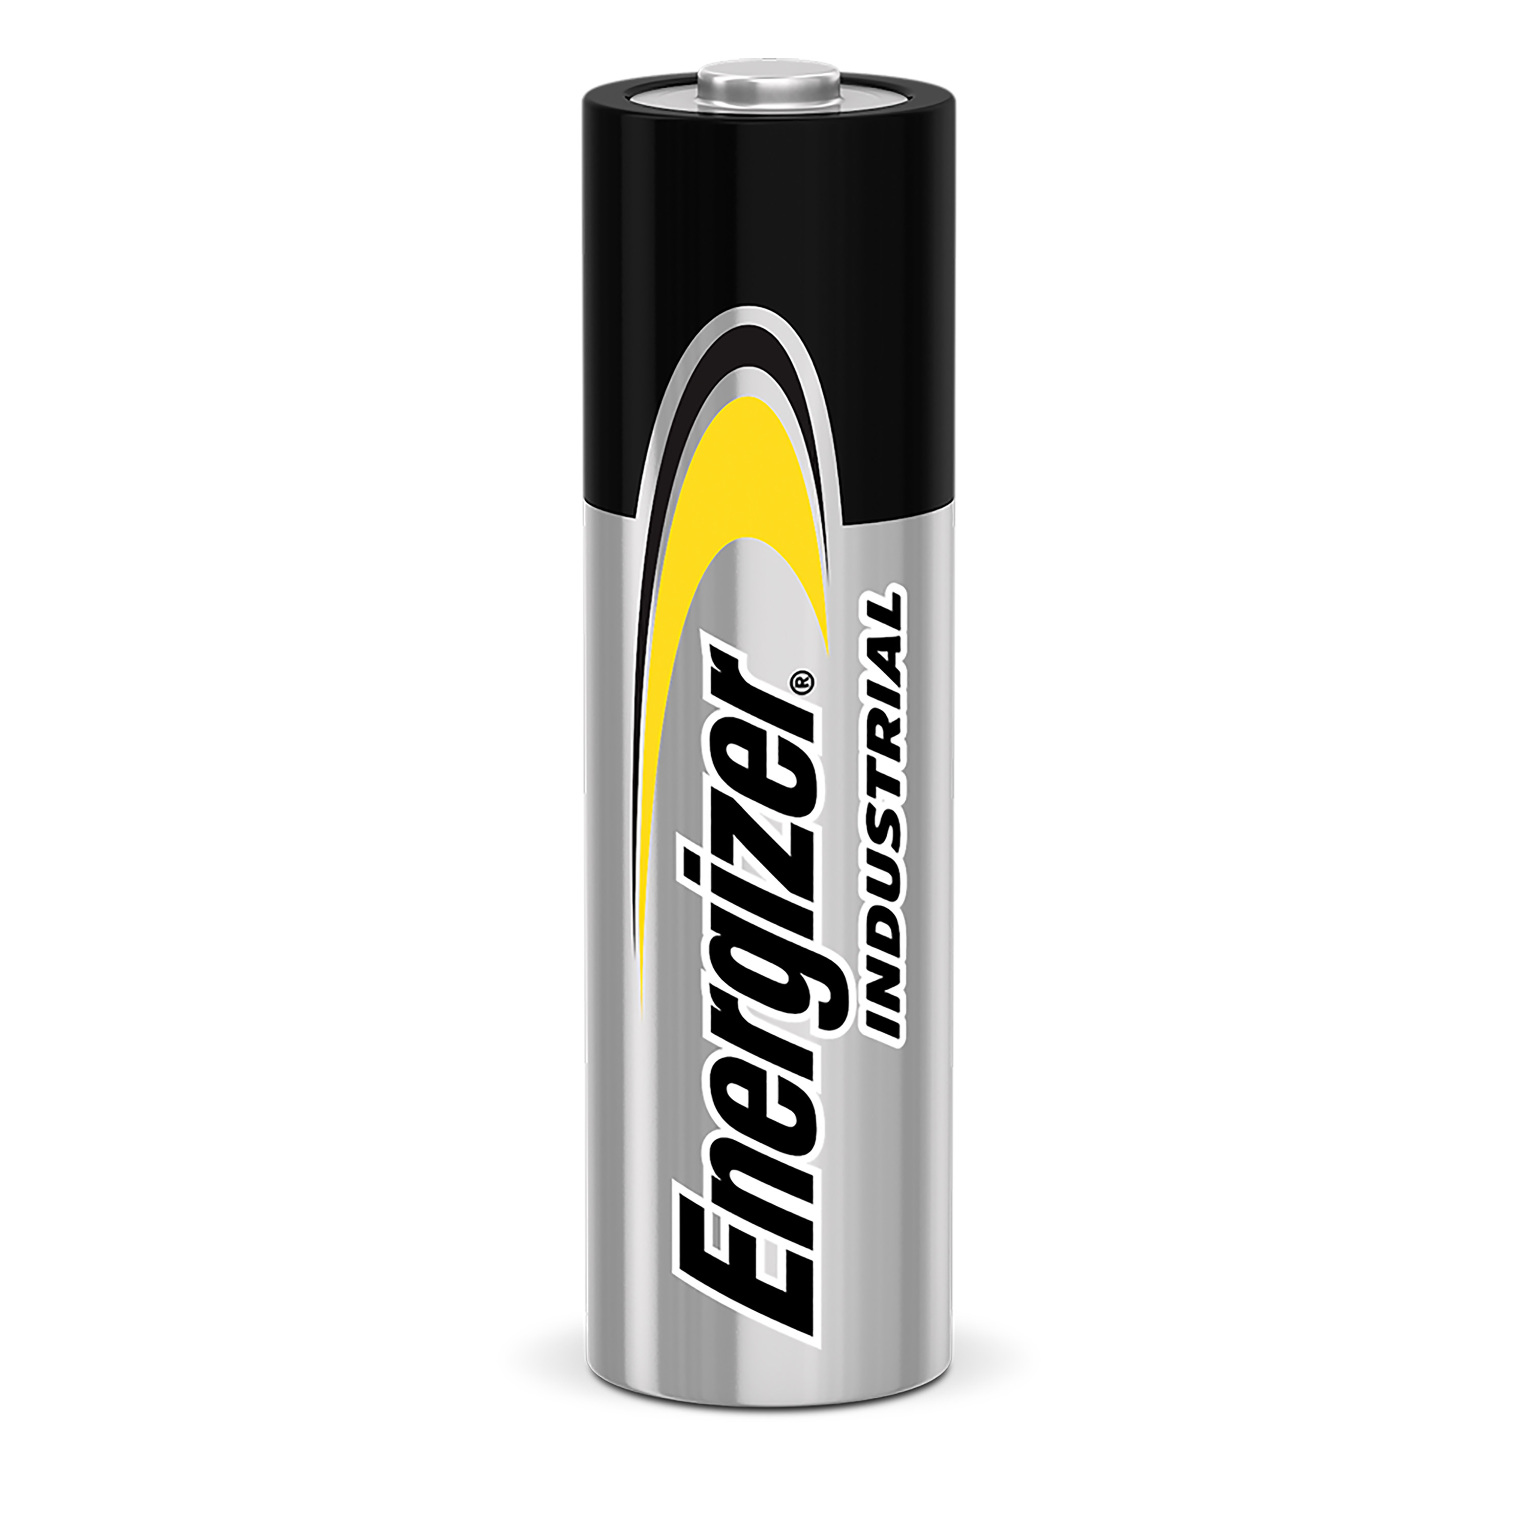 Energizer Industrial AA Alkaline Batteries - 144 Pack